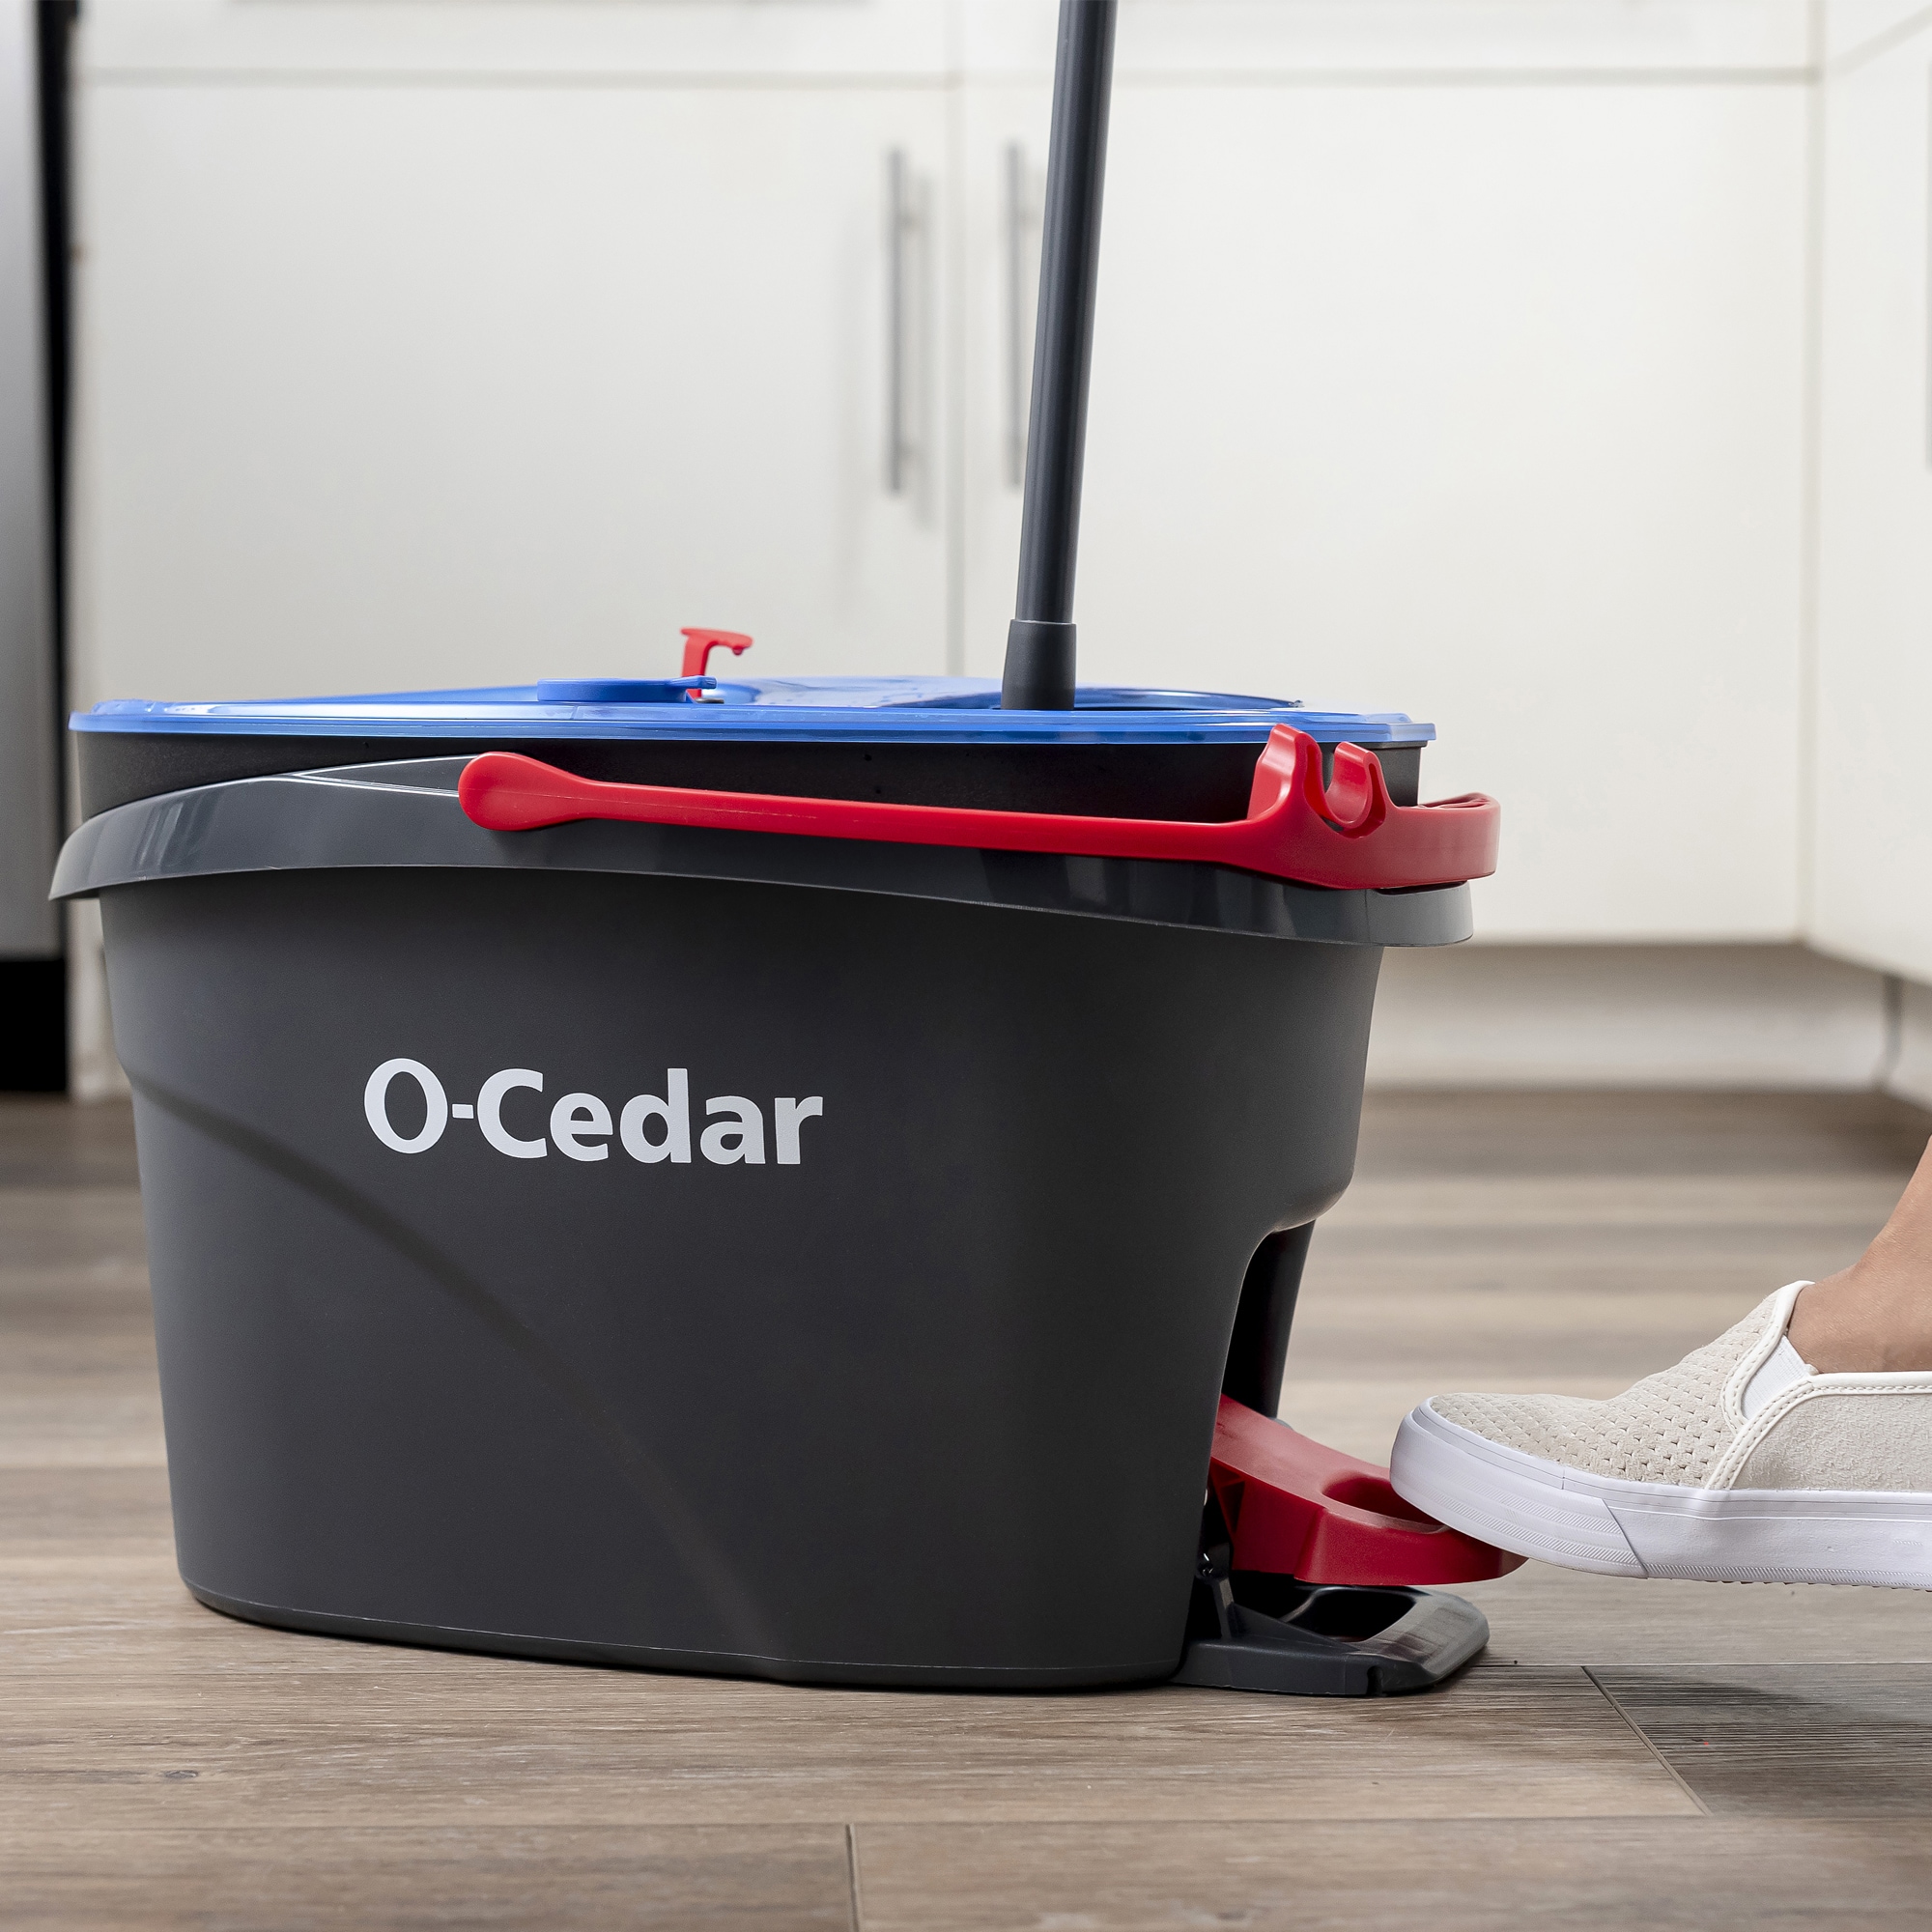 O-Cedar Microfiber EasyWring Spin Mop & Bucket System - Shop Mops at H-E-B